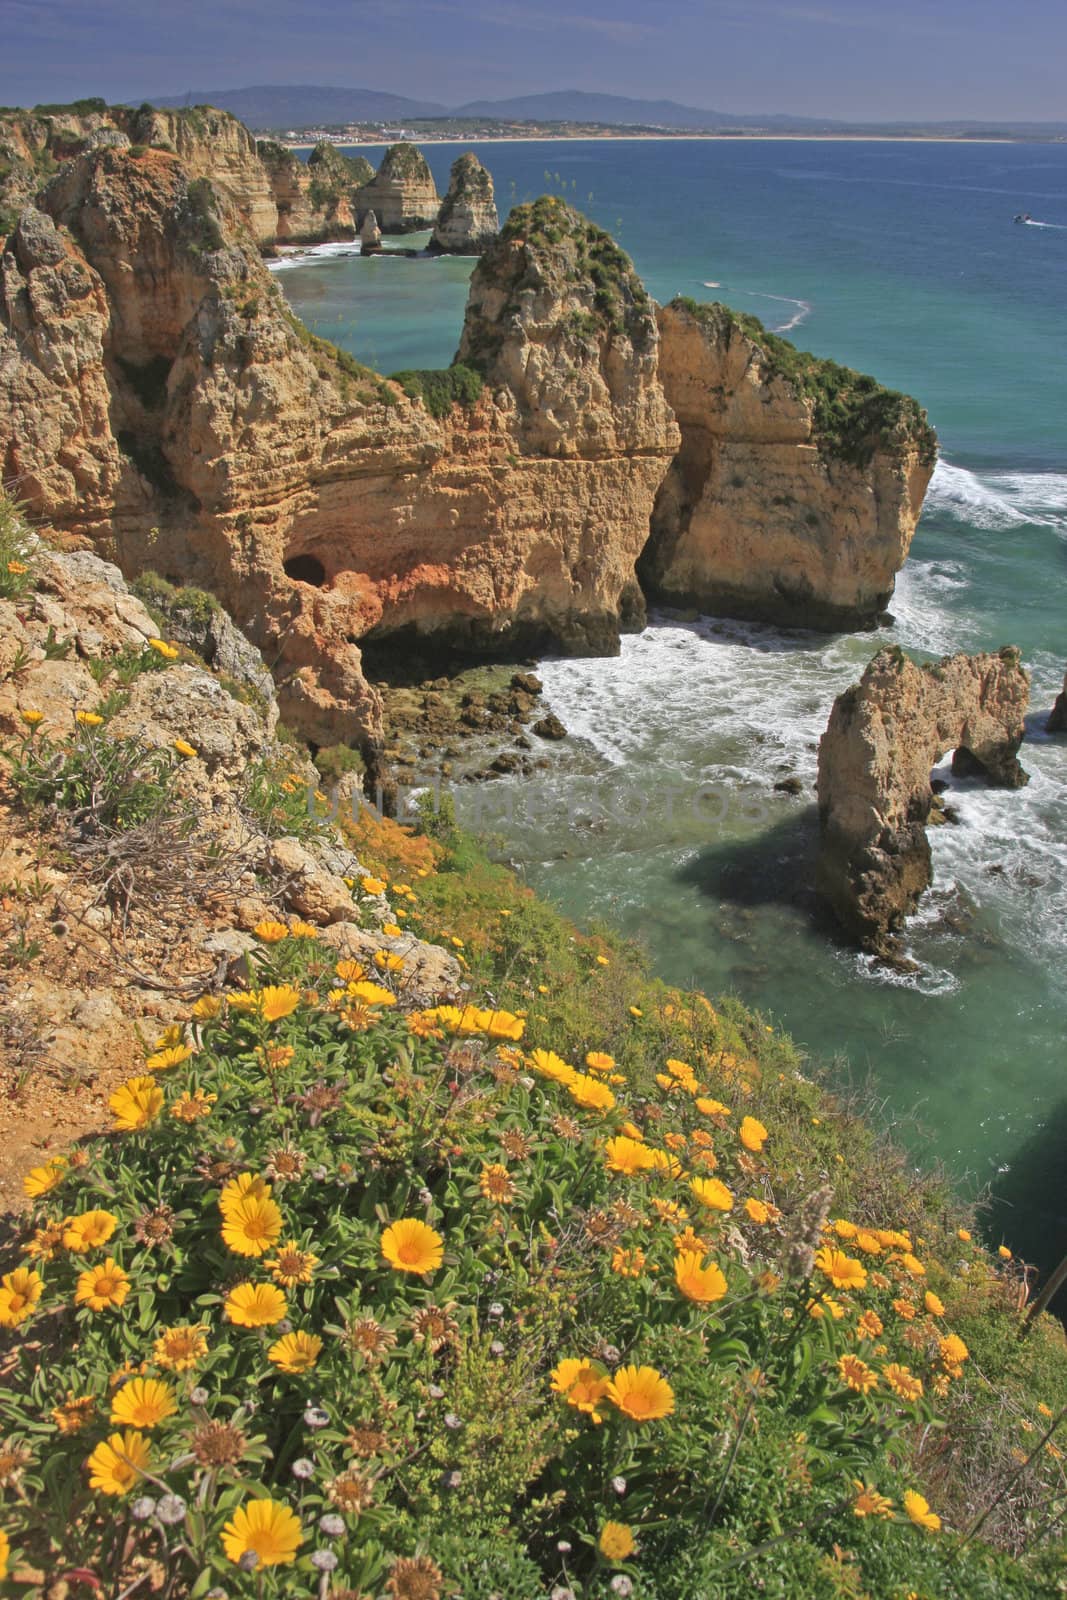 Flowers and seaside cliffs, Algarve, Portugal